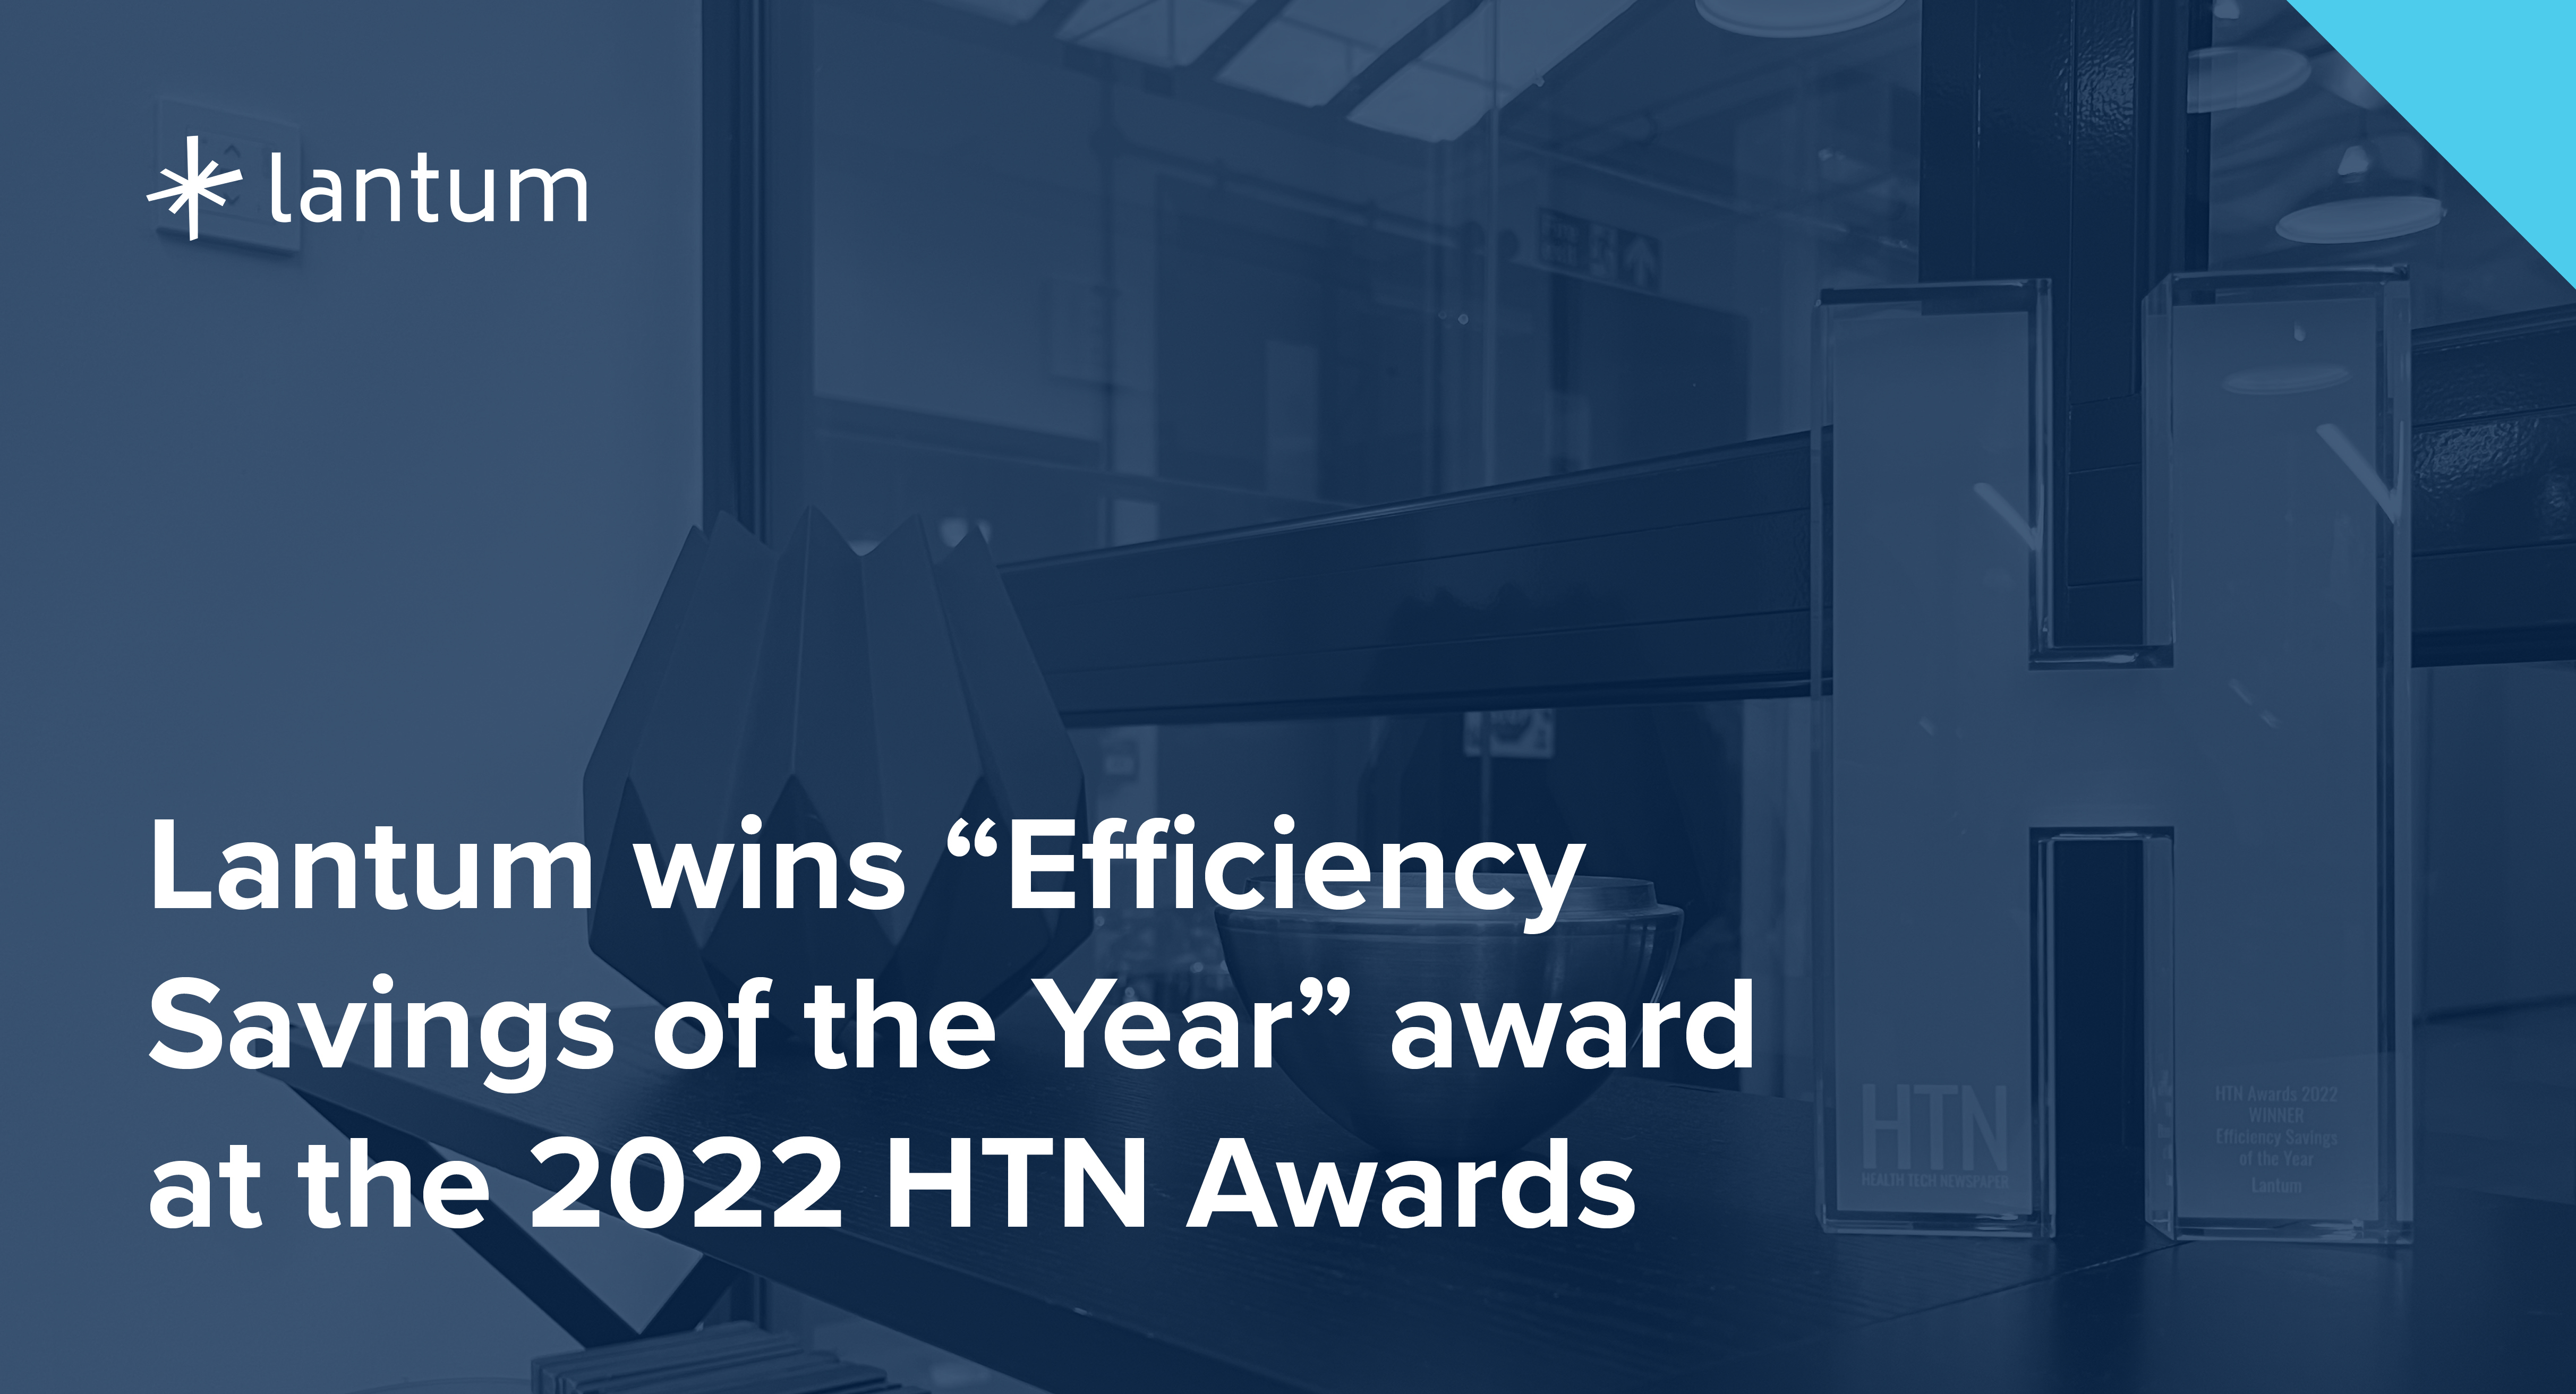  Lantum wins “Efficiency Savings of the Year” award at the 2022 HTN Awards